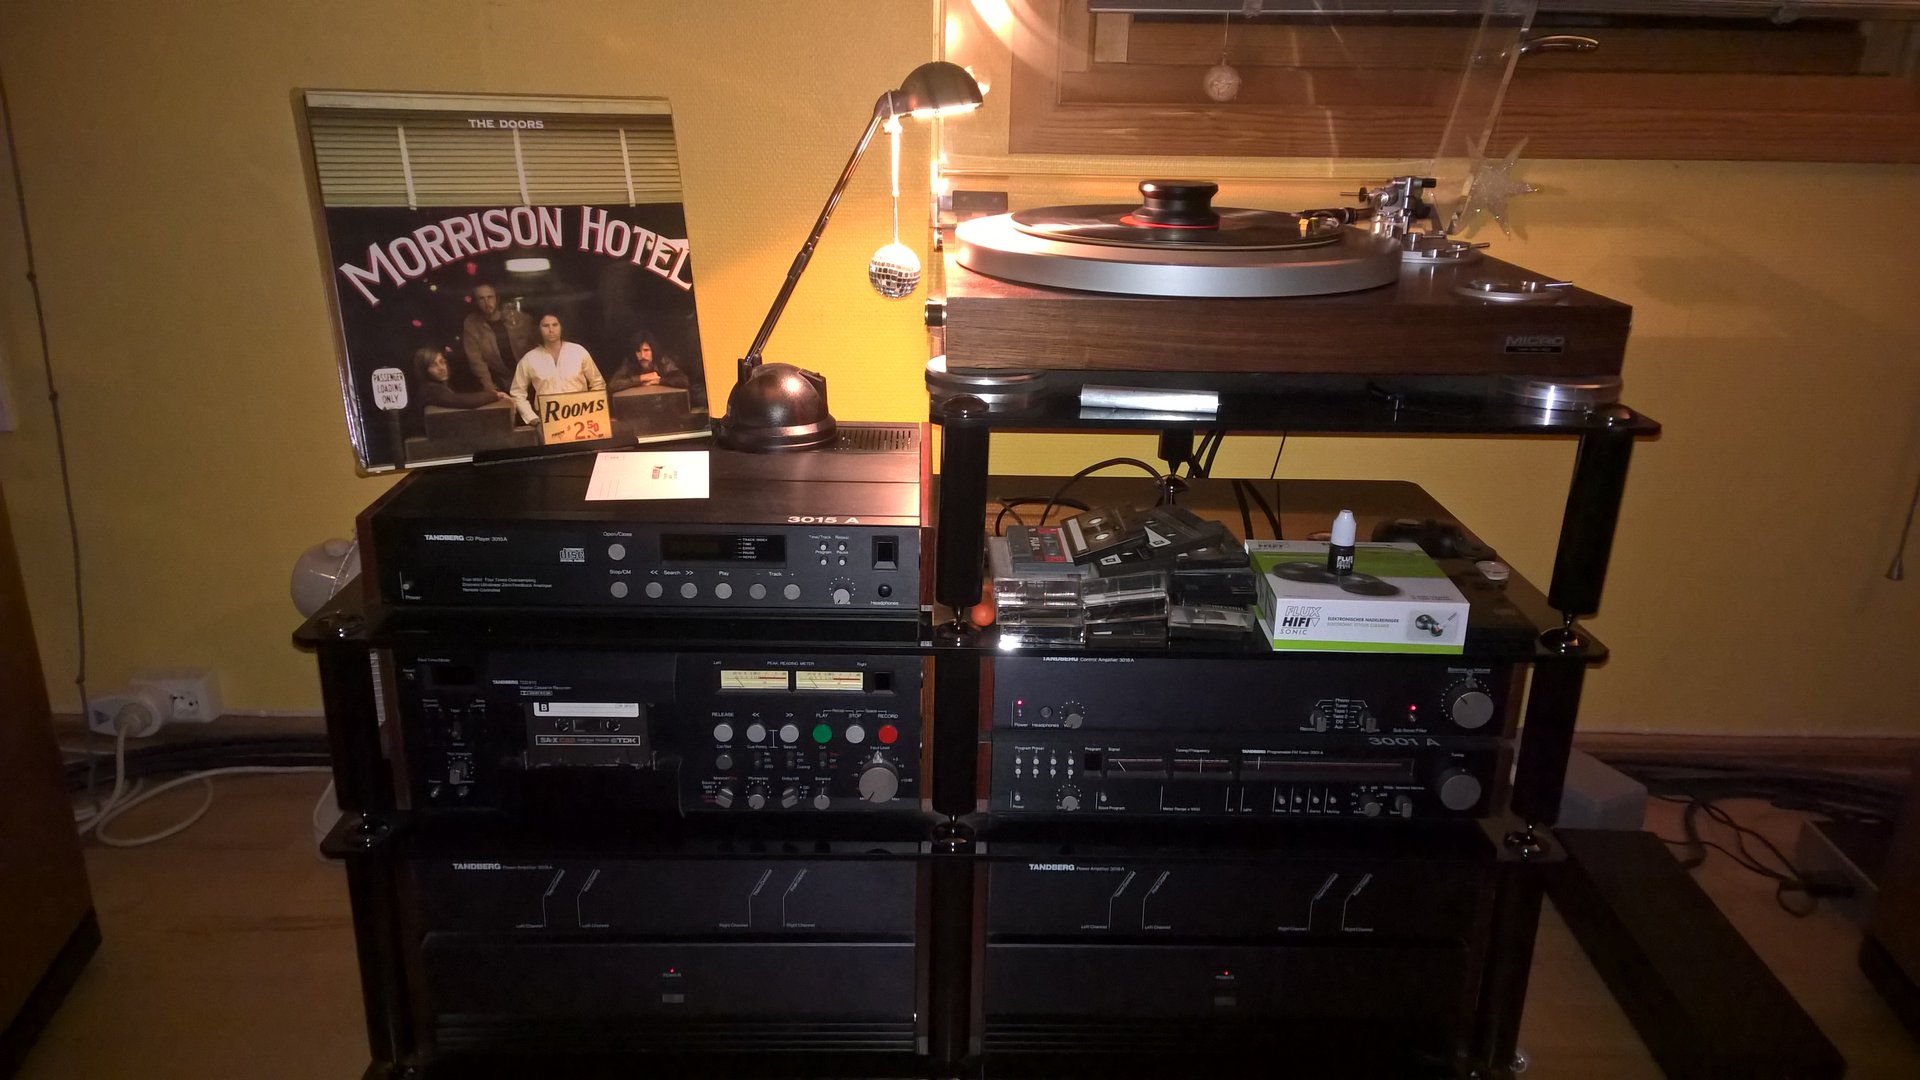 The Doors-Morrison Hotel 2 X 45 RPM.jpg